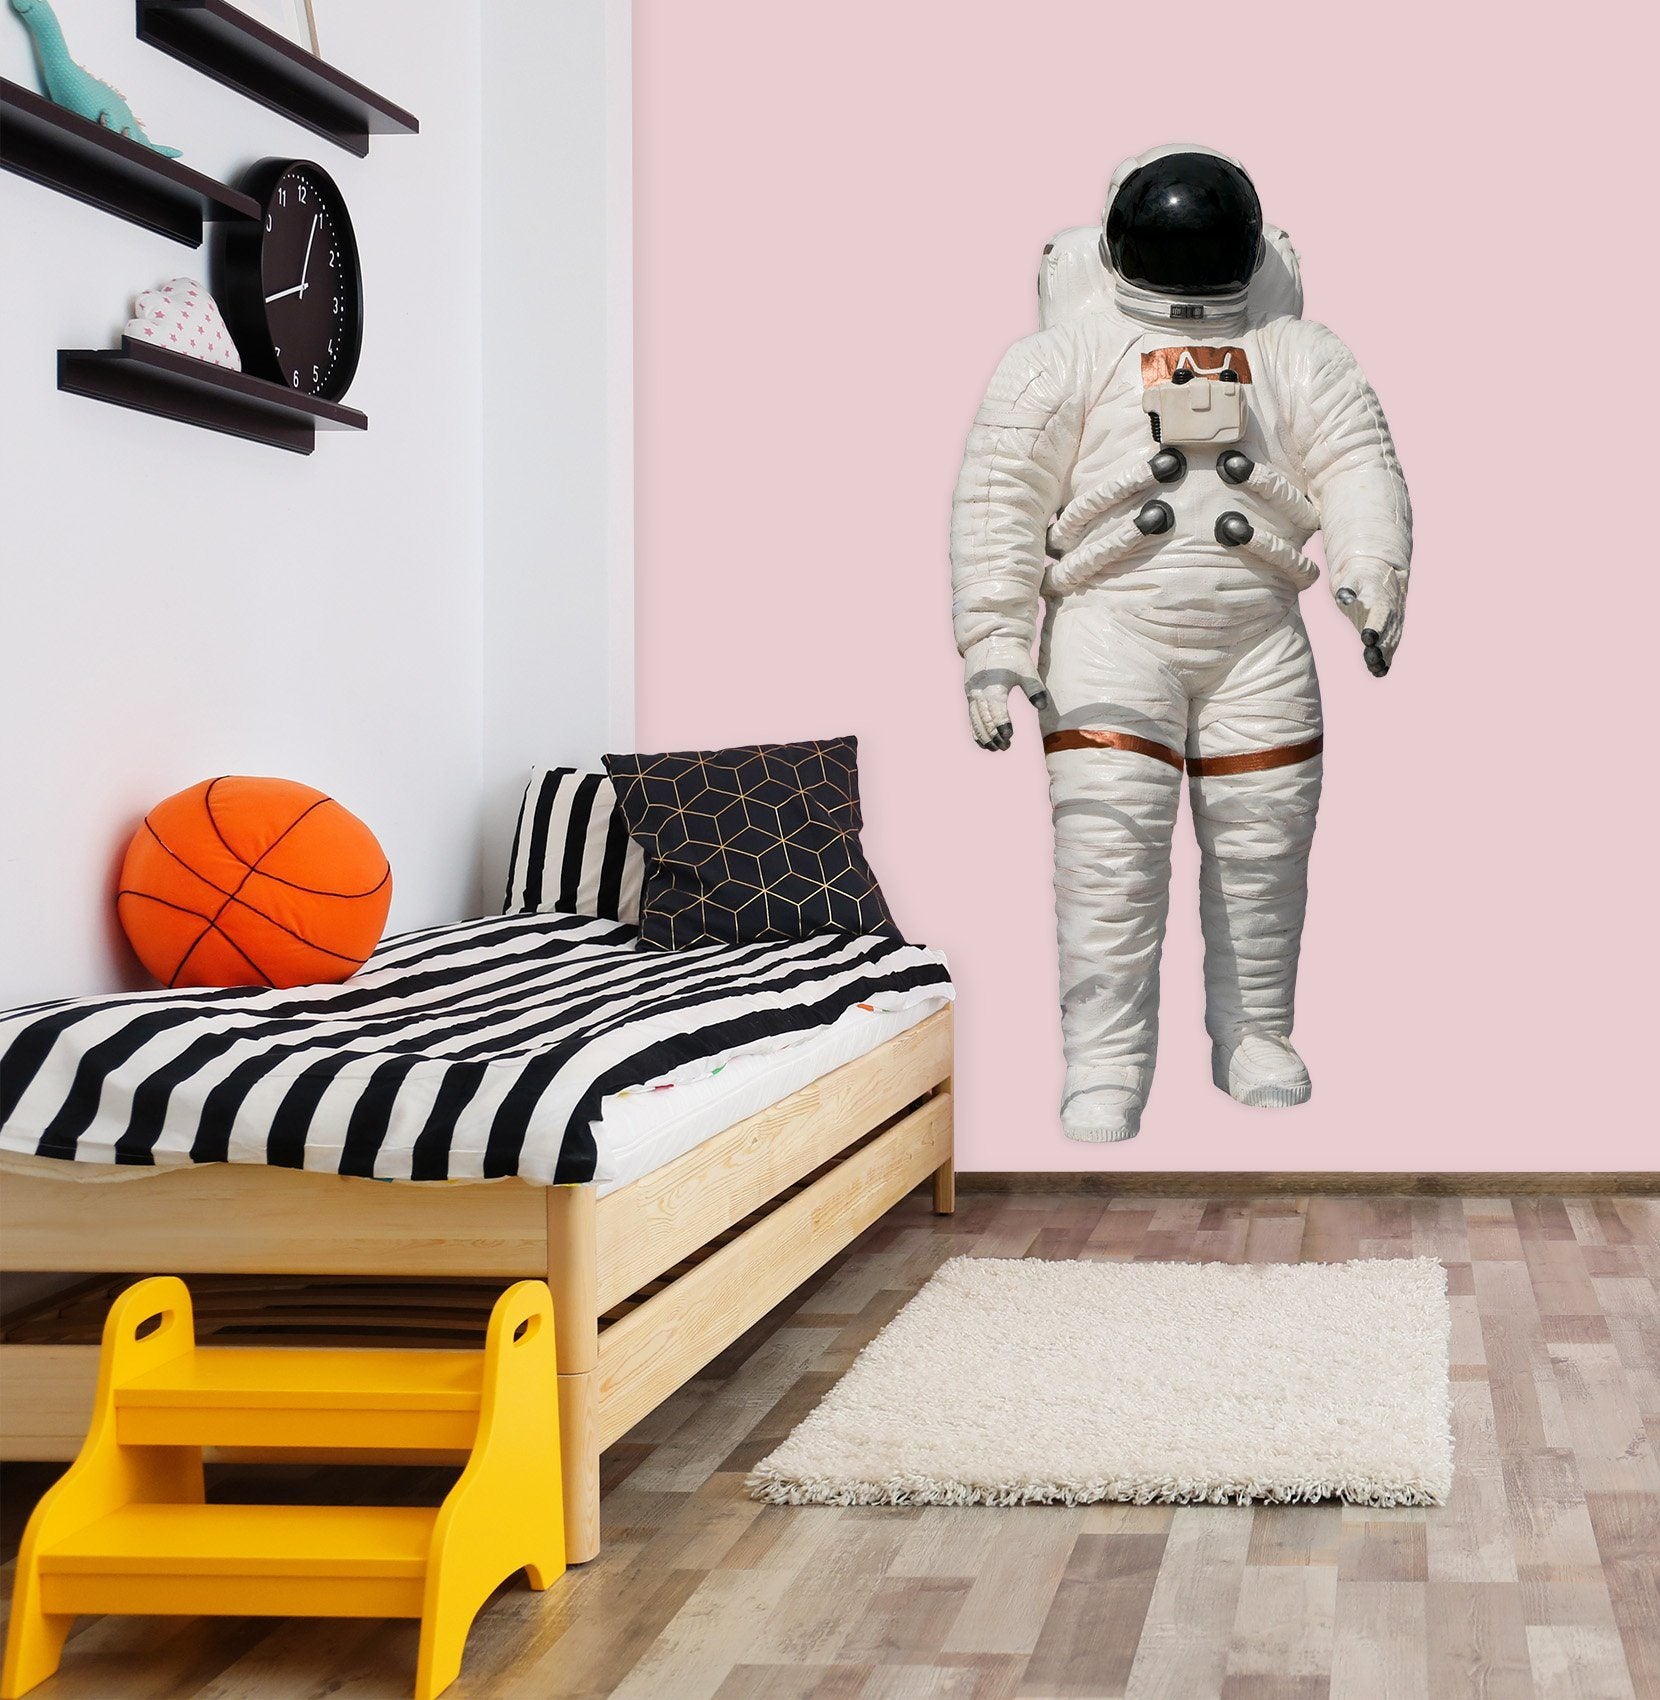 3D Astronaut 0233 Wall Stickers Wallpaper AJ Wallpaper 